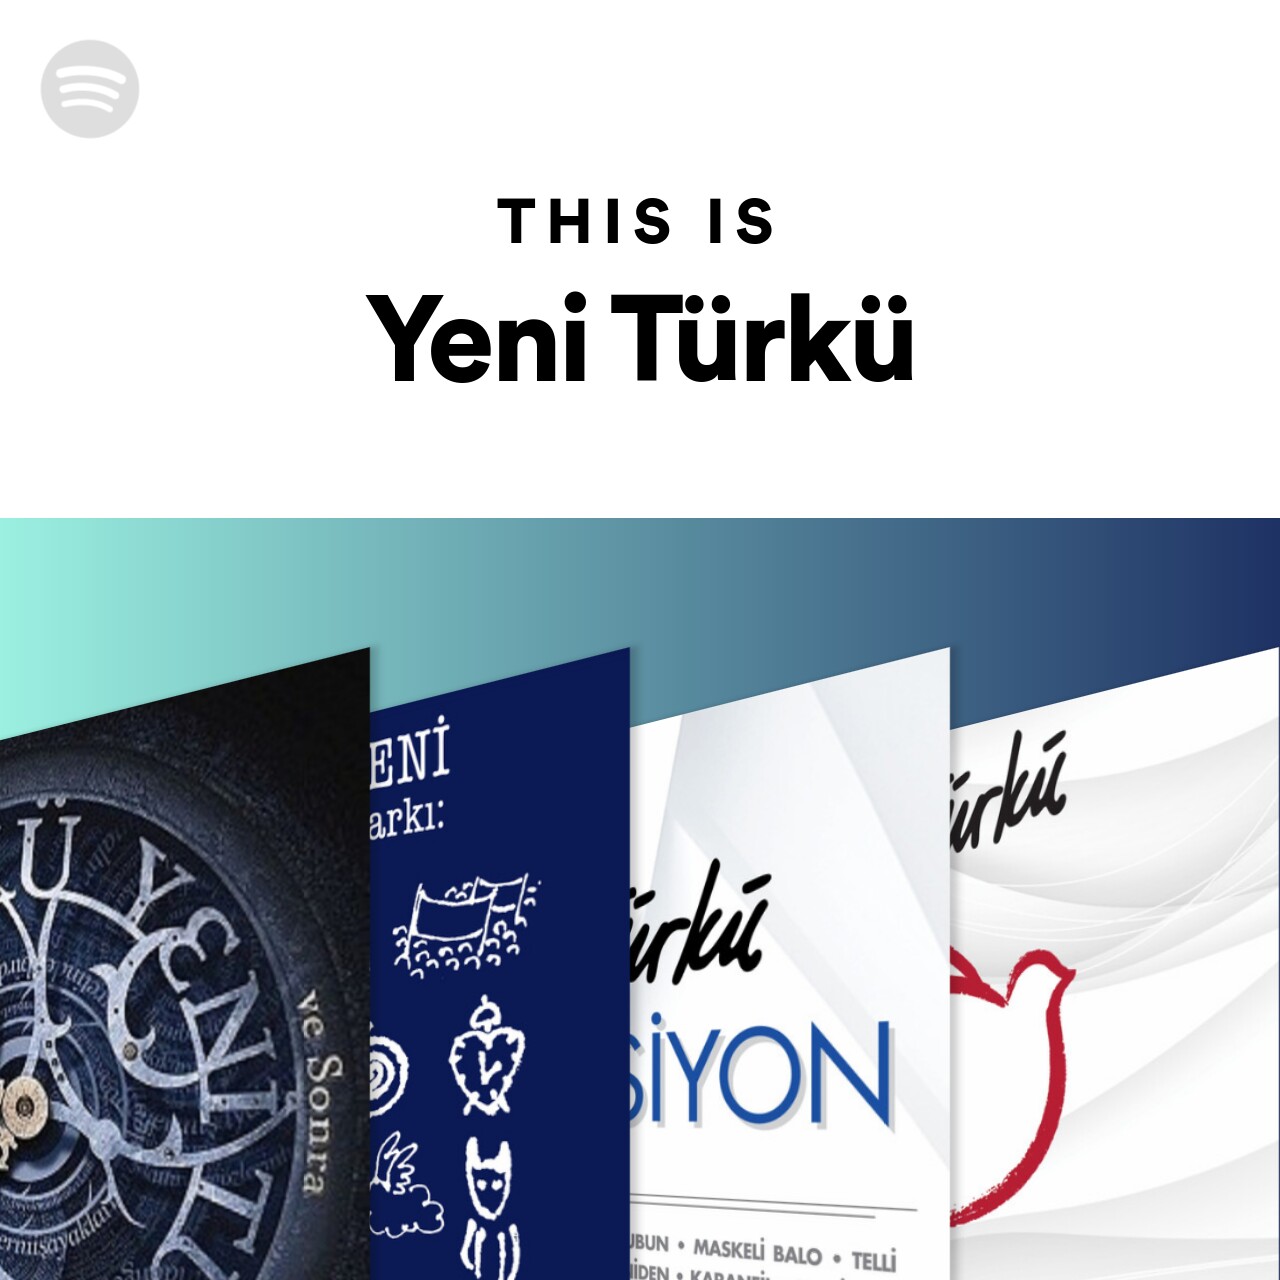 This Is Yeni Türkü